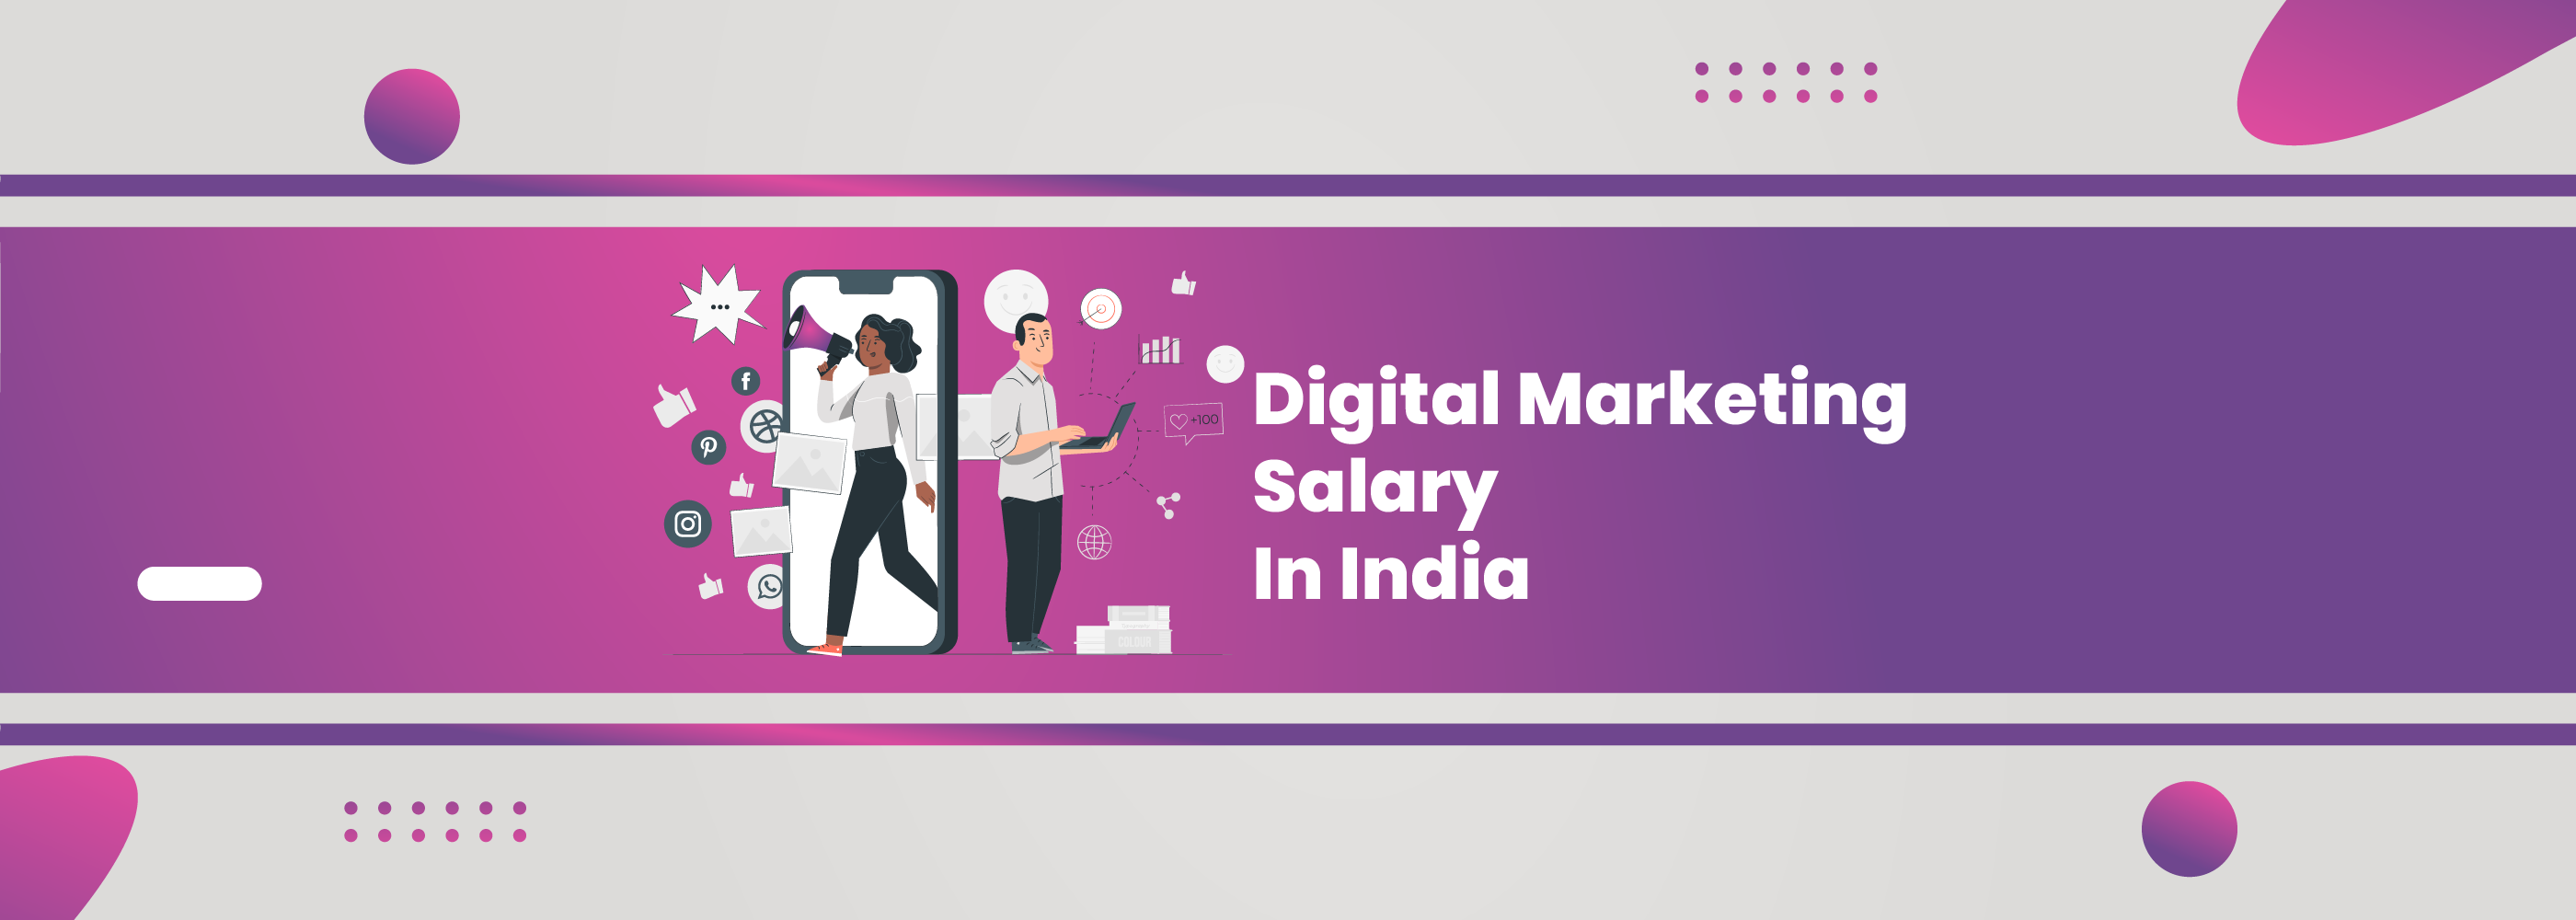 Digital Marketing Salary In India